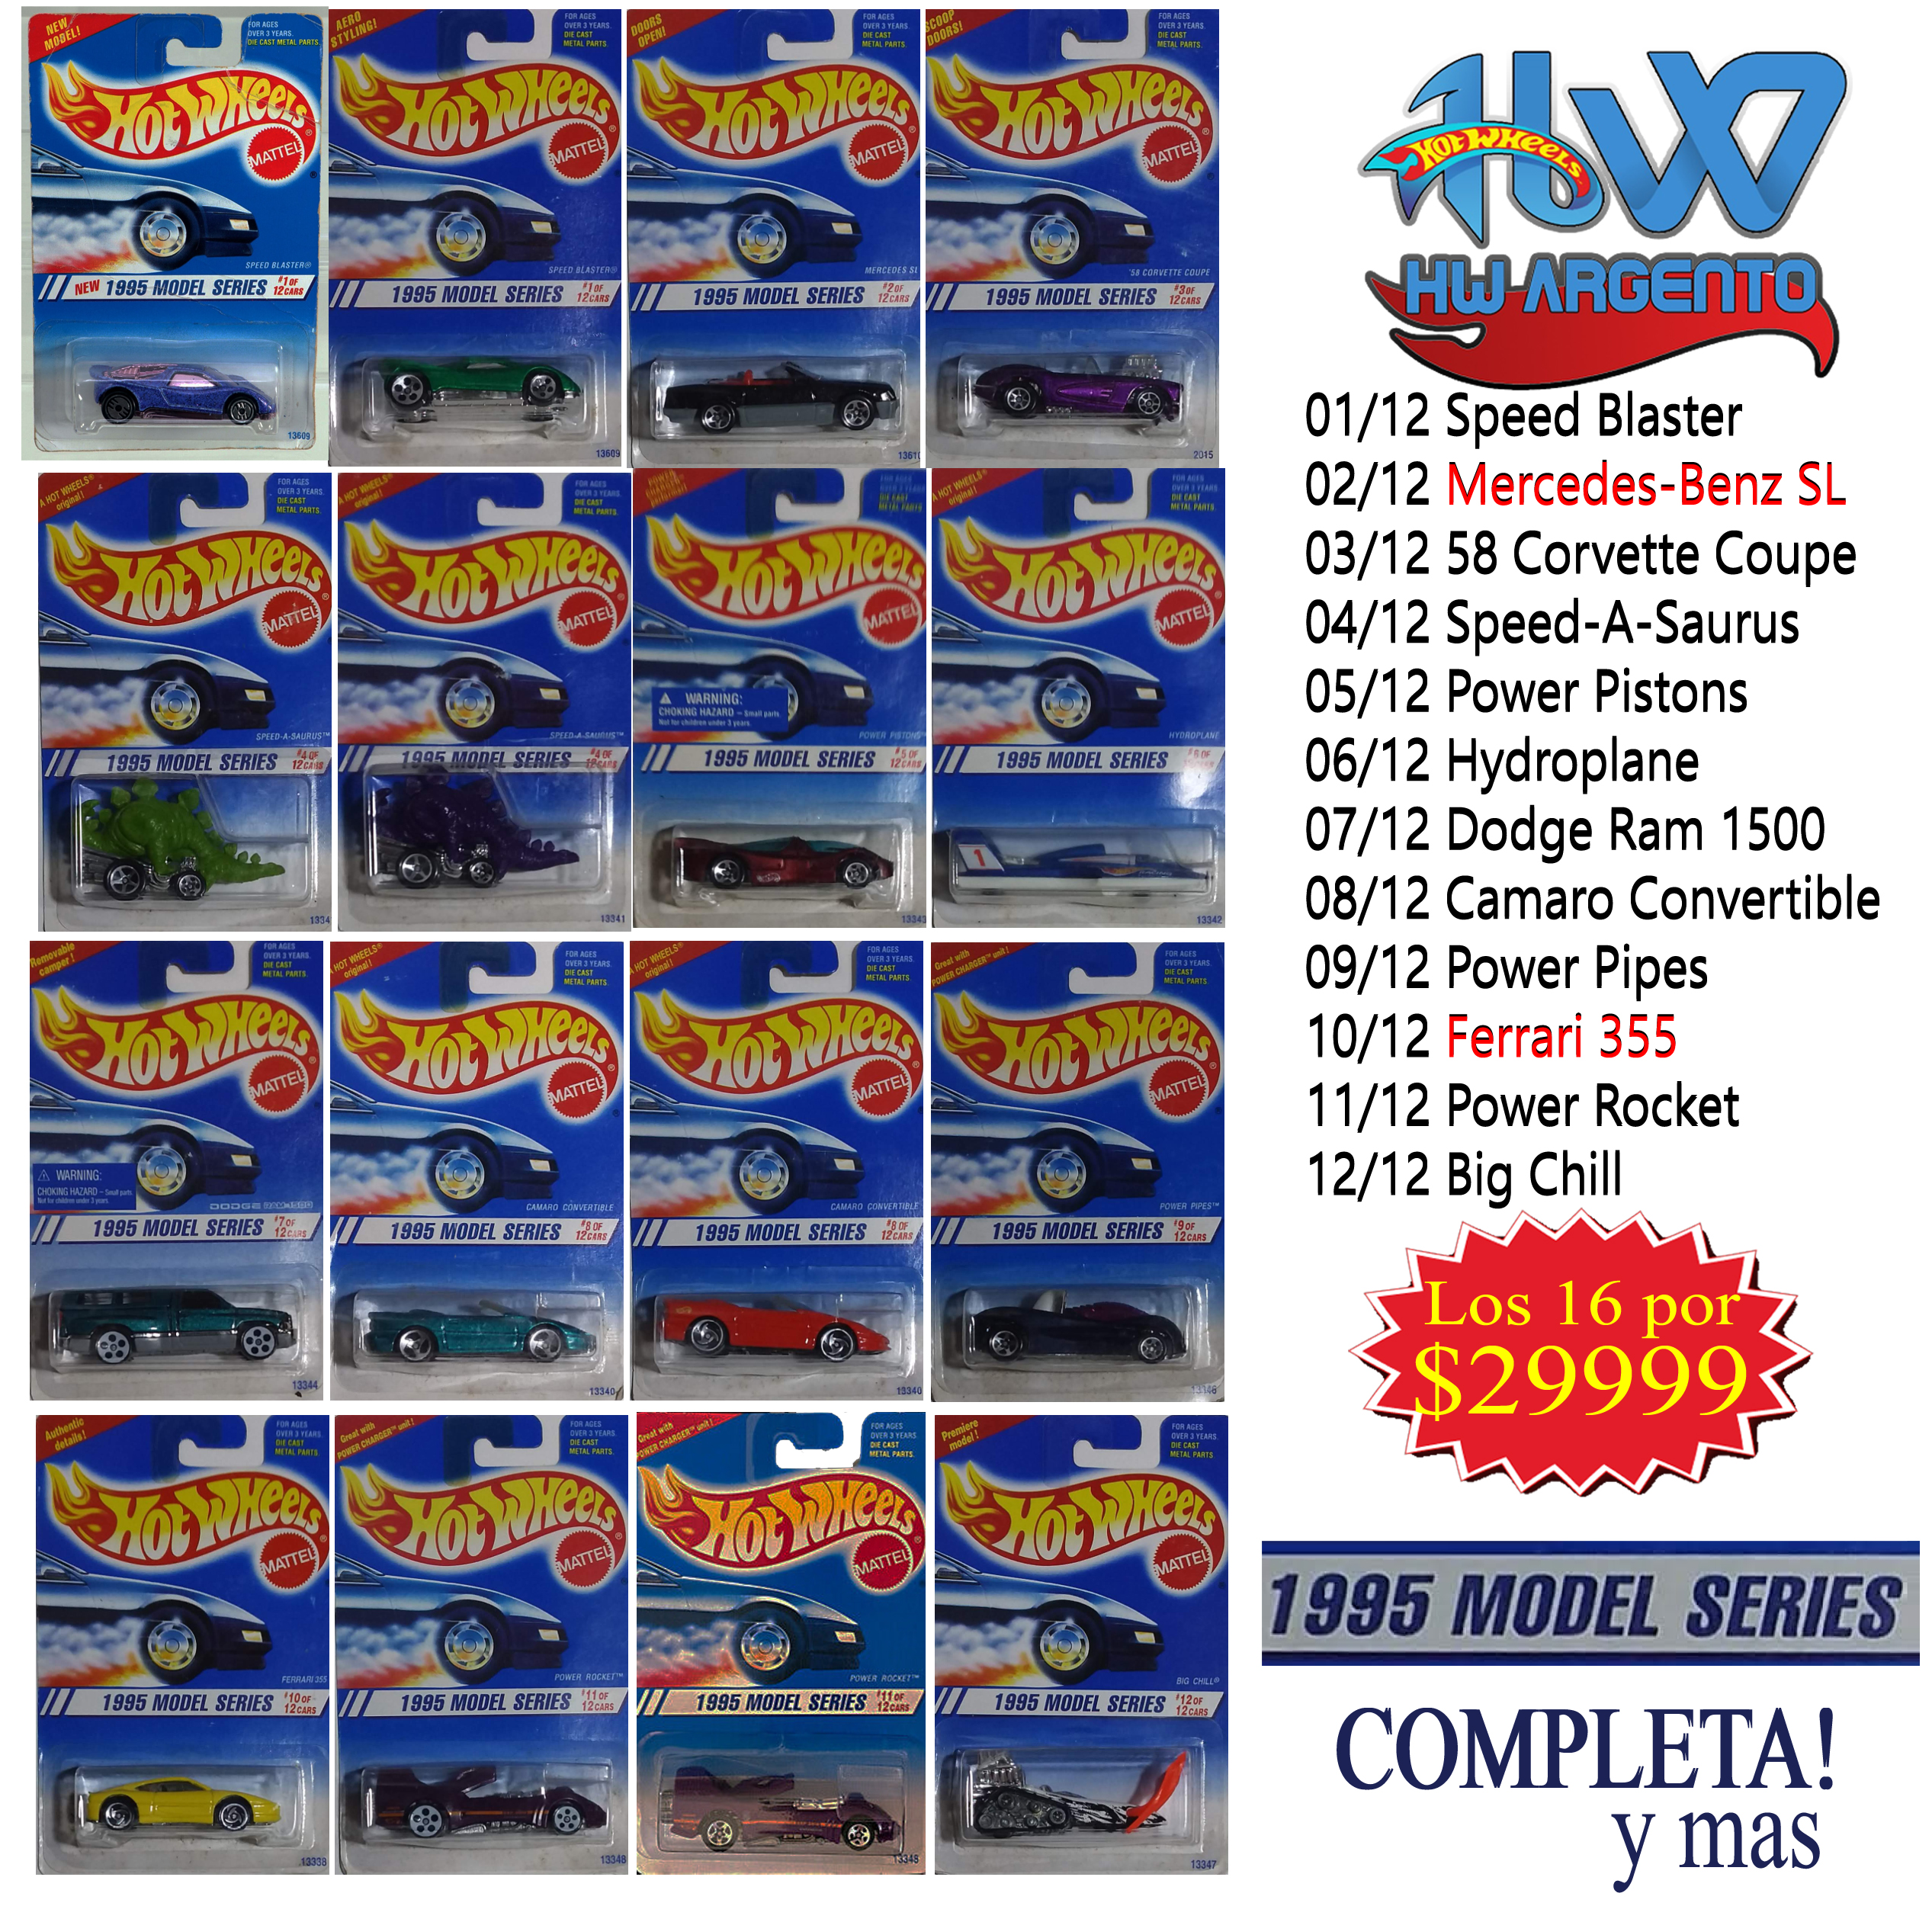 1995 Model Series Serie Completa Hot Wheels